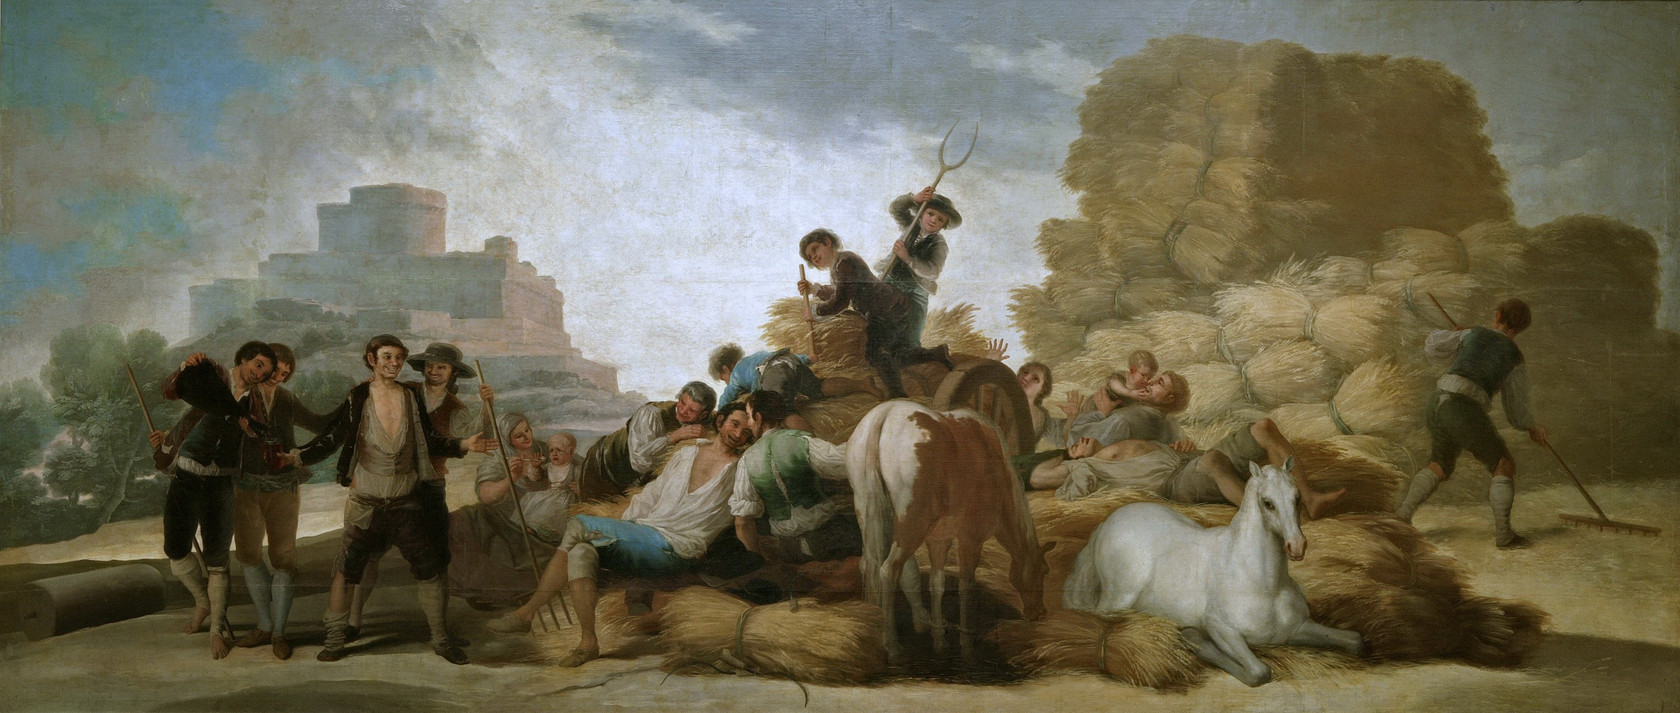 Картина - Лето, 1786 - Музей Прадо